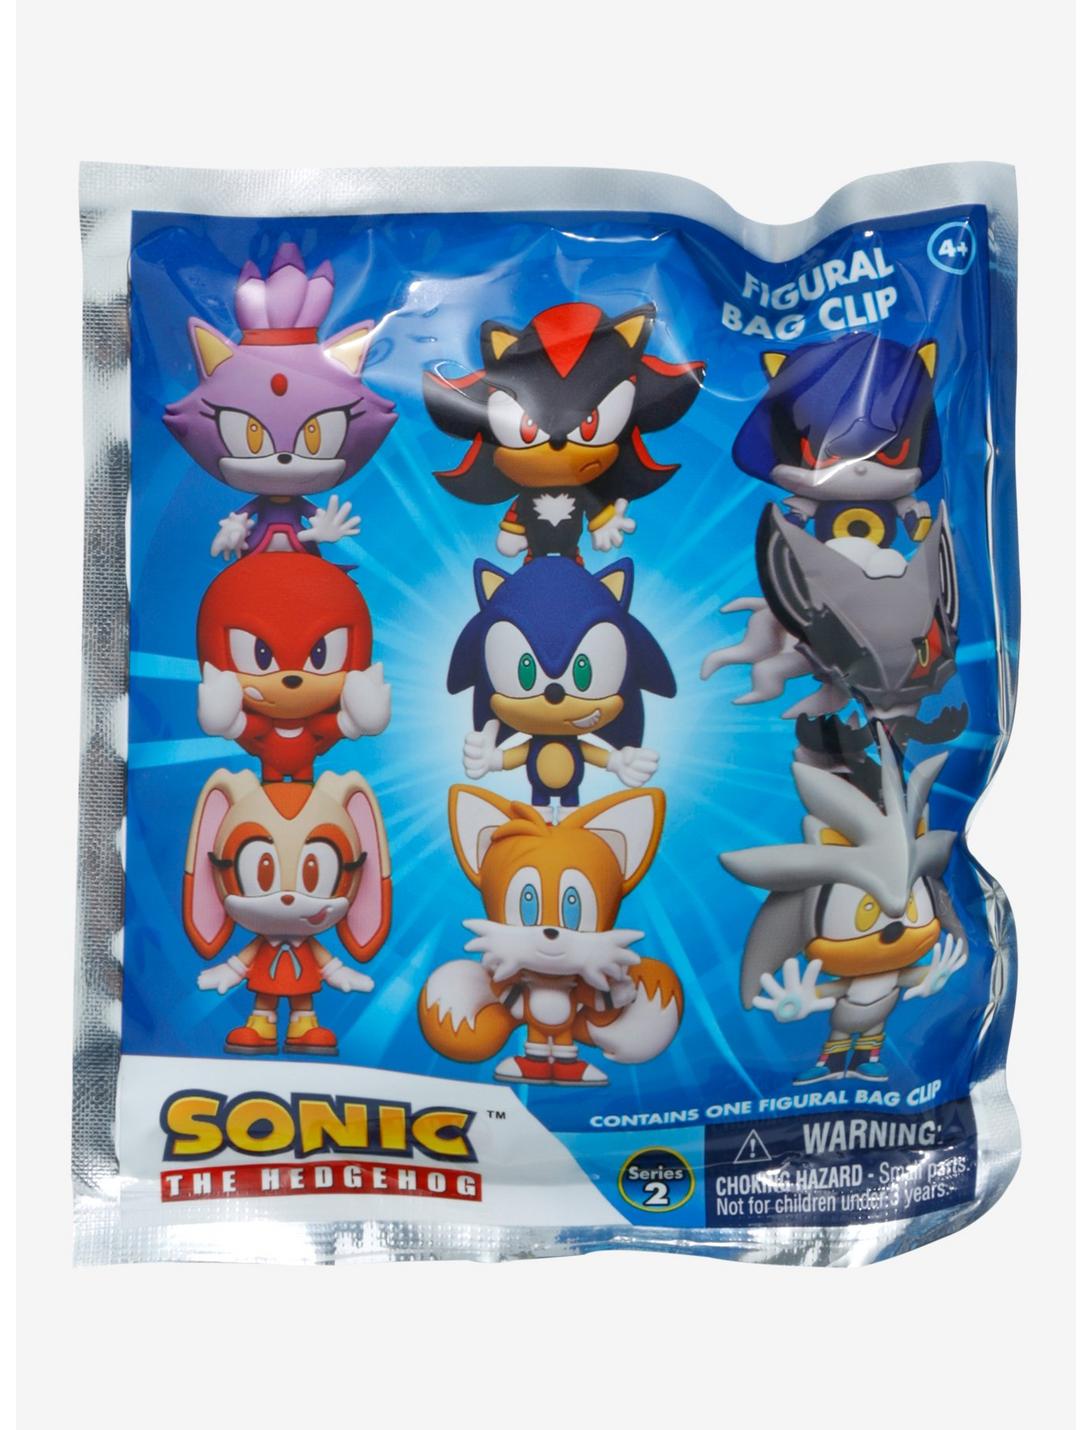 Sonic The Hedgehog Characters (Series 2) Blind Bag Figural Bag Clip, , hi-res